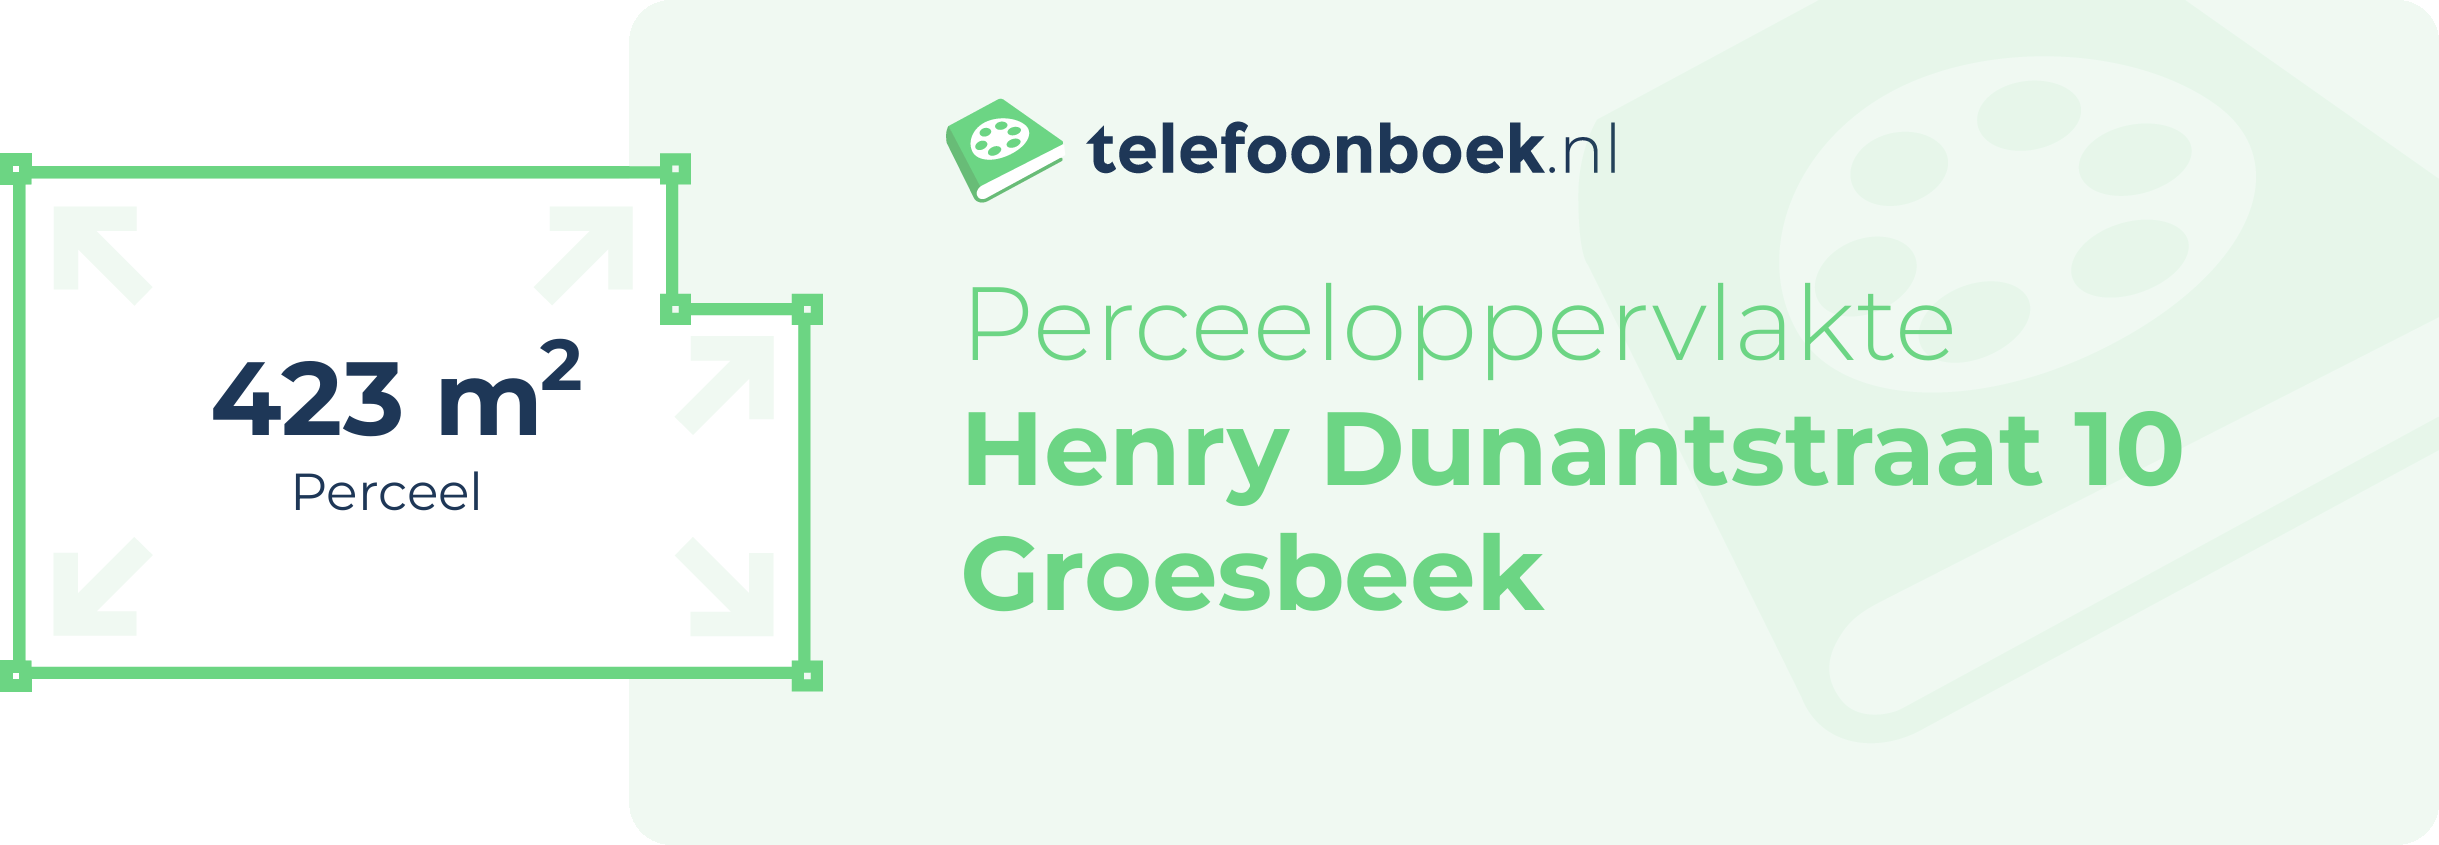 Perceeloppervlakte Henry Dunantstraat 10 Groesbeek